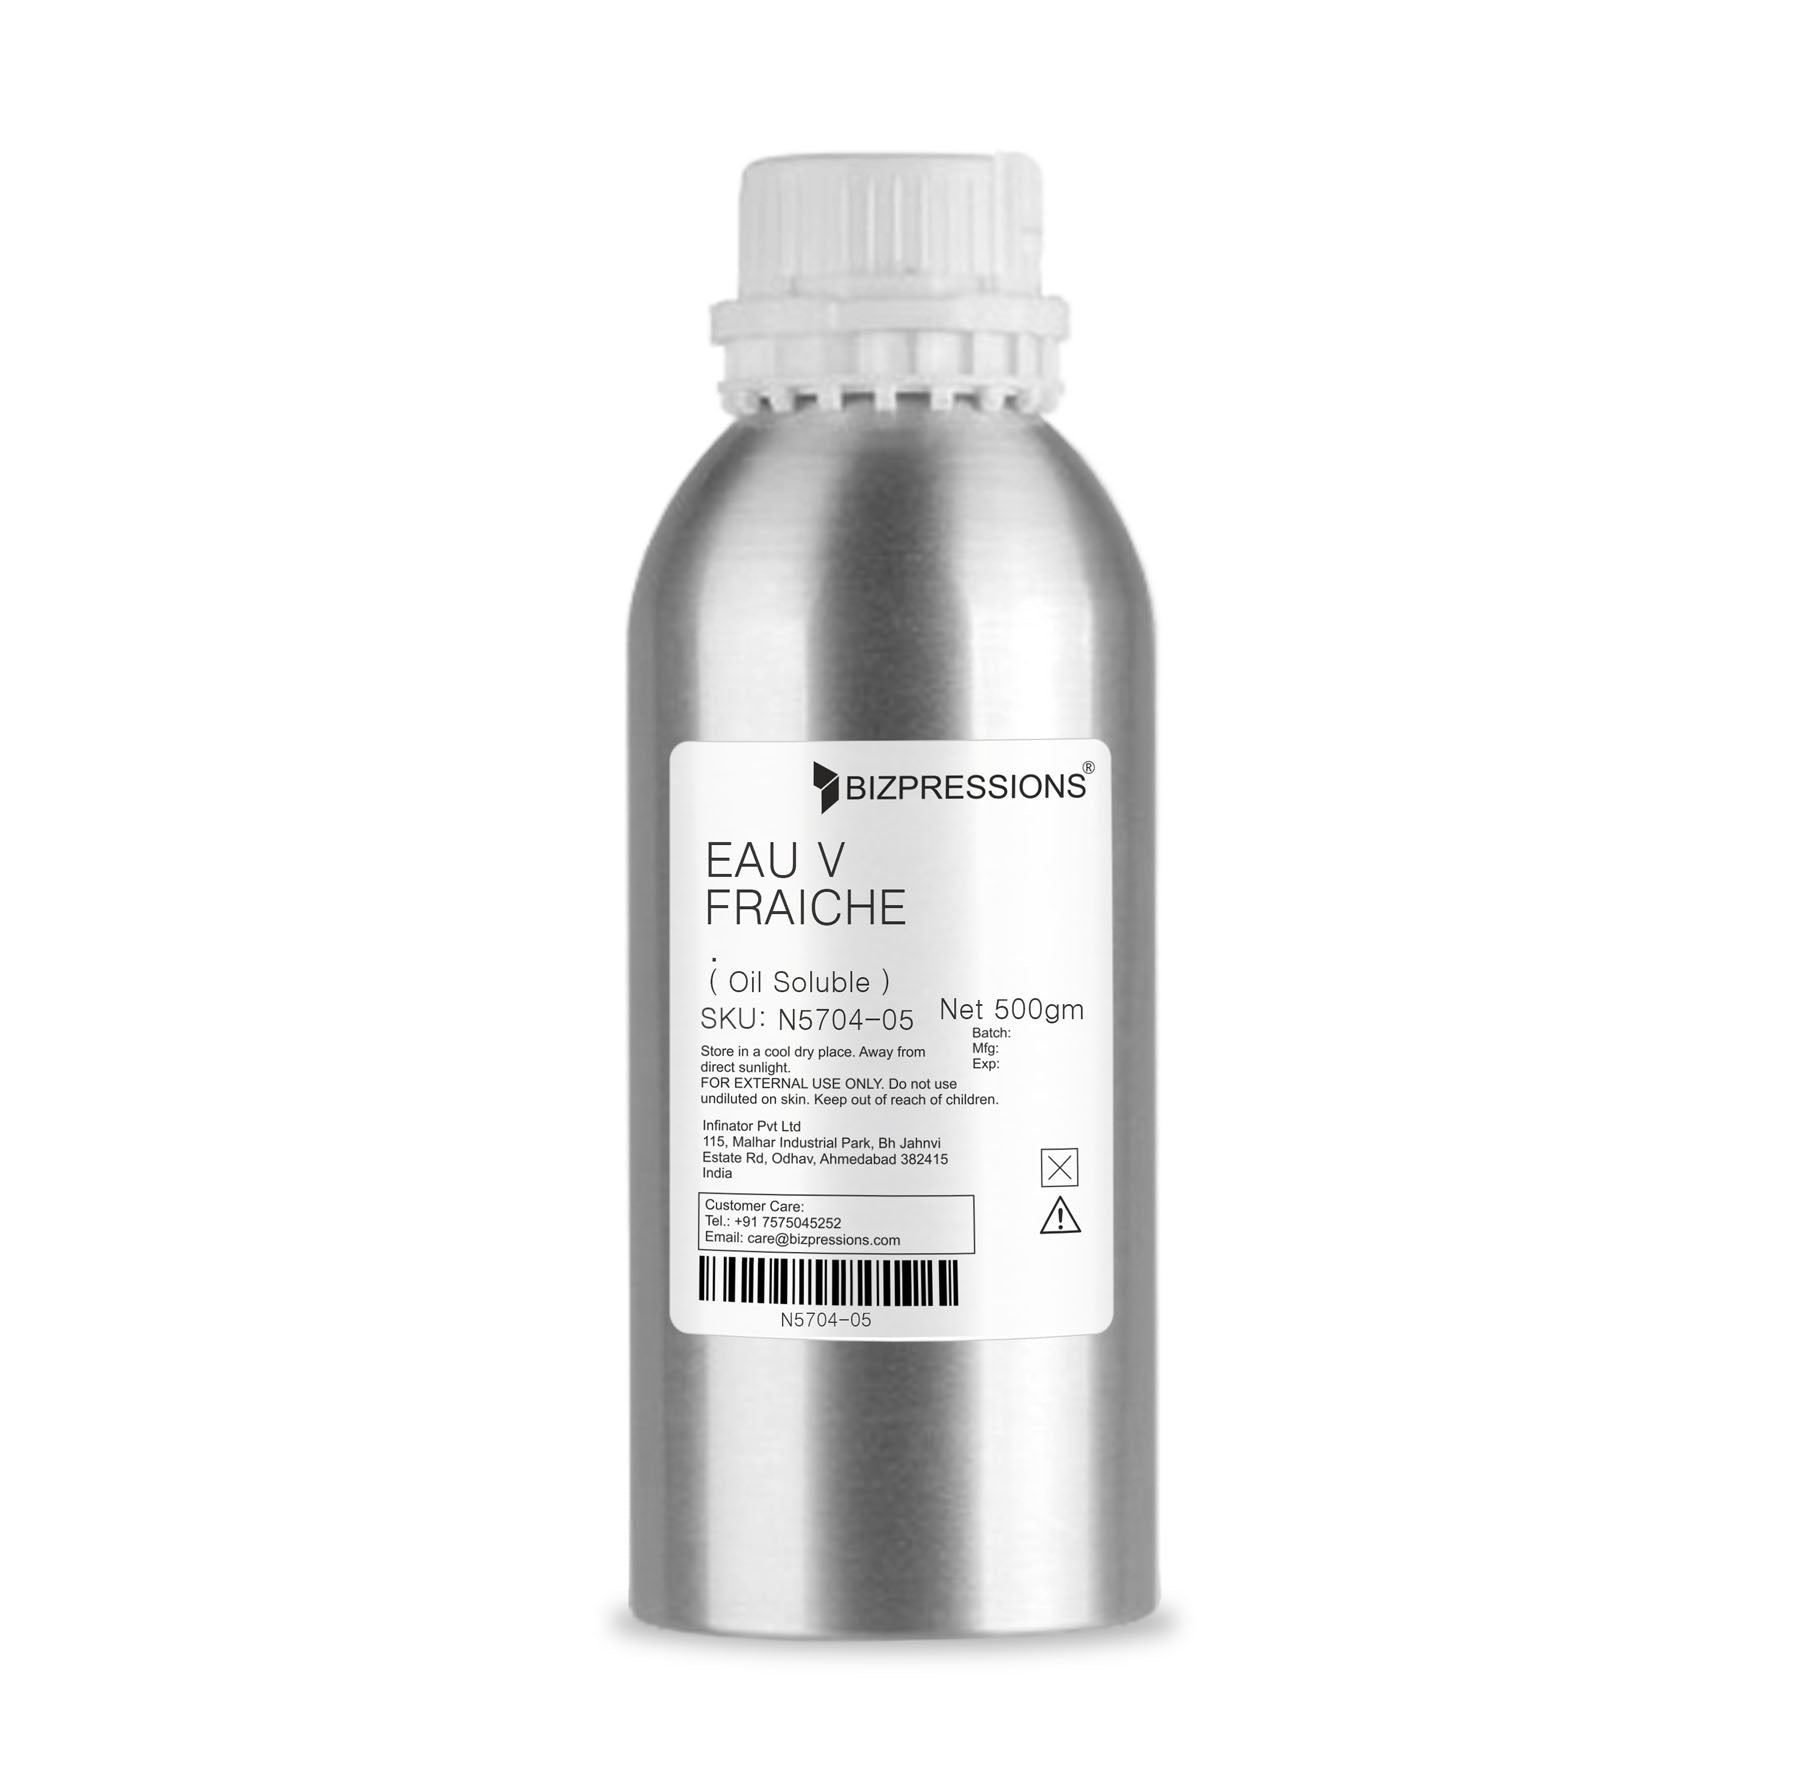 EAU V FRAICHE - Fragrance ( Oil Soluble ) - 500 gm